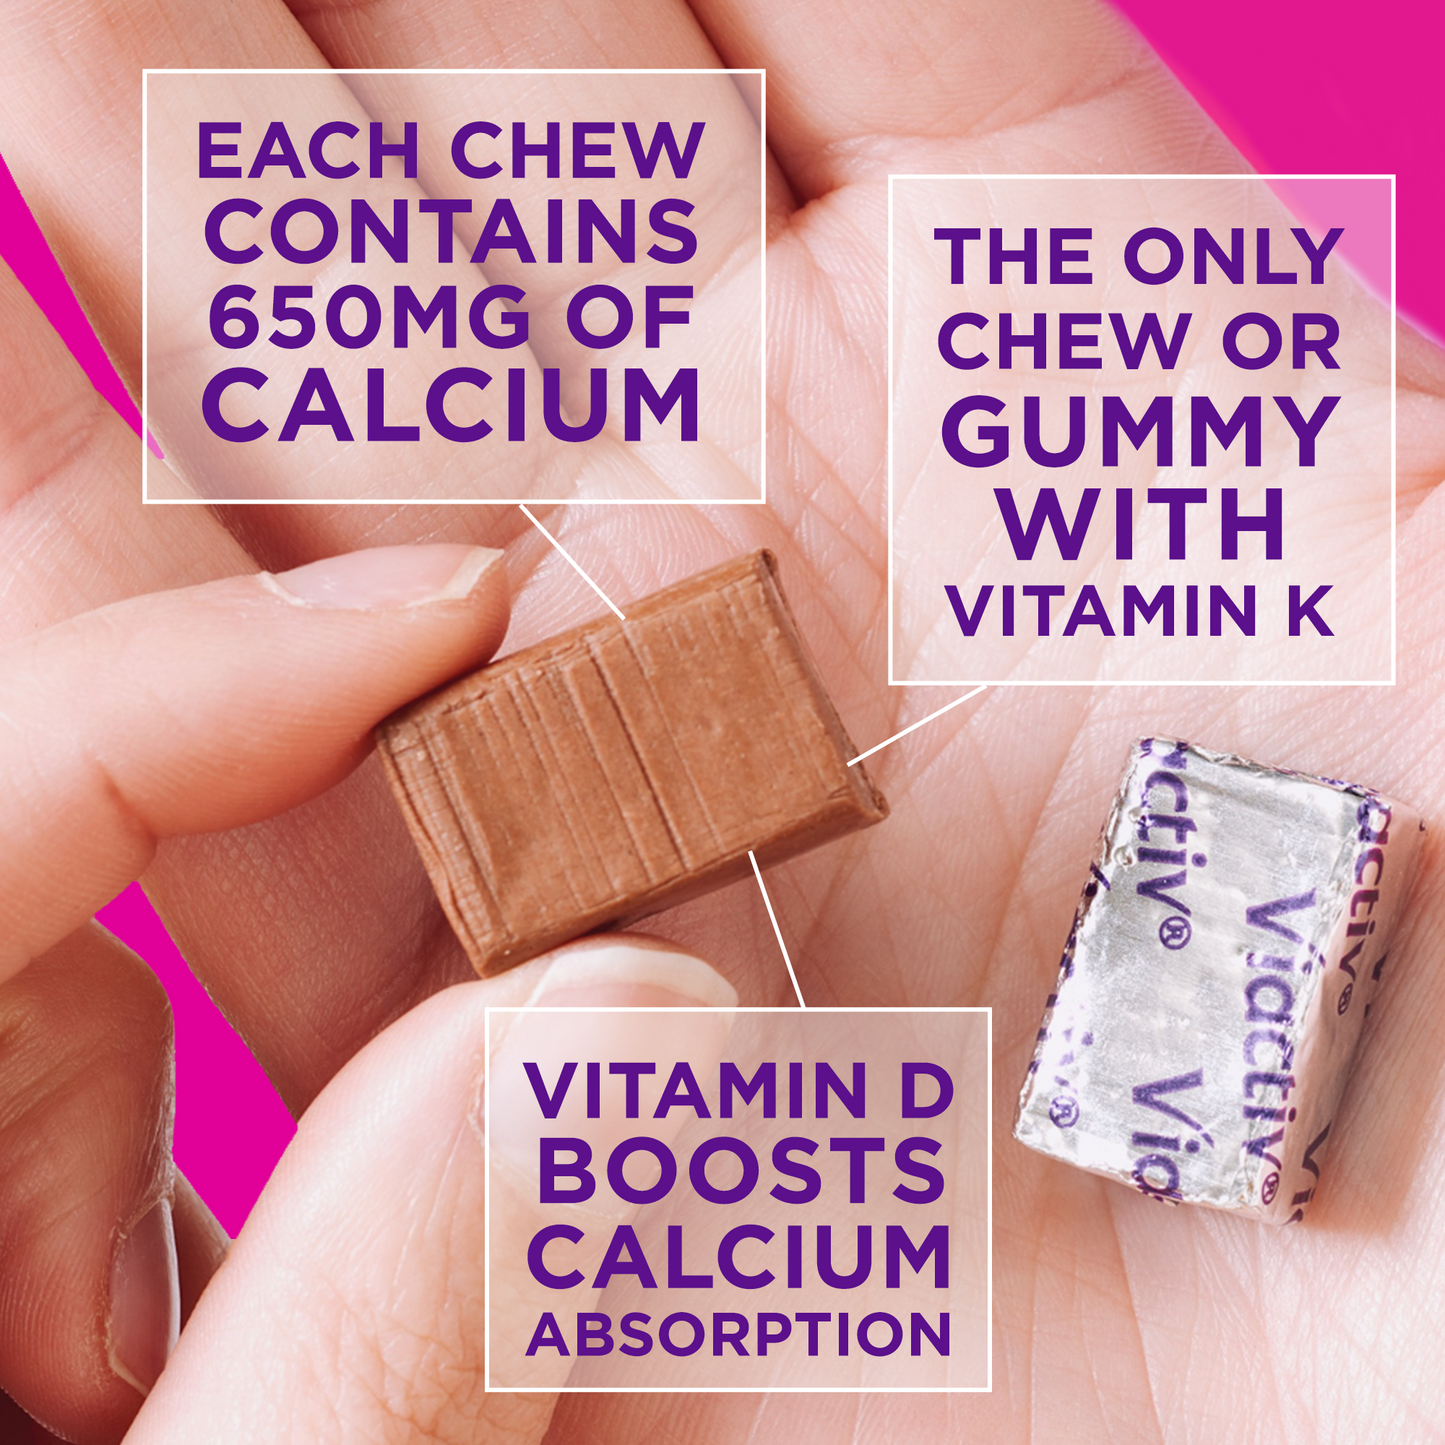 Facts about Viactiv milk chocolate calcium chews